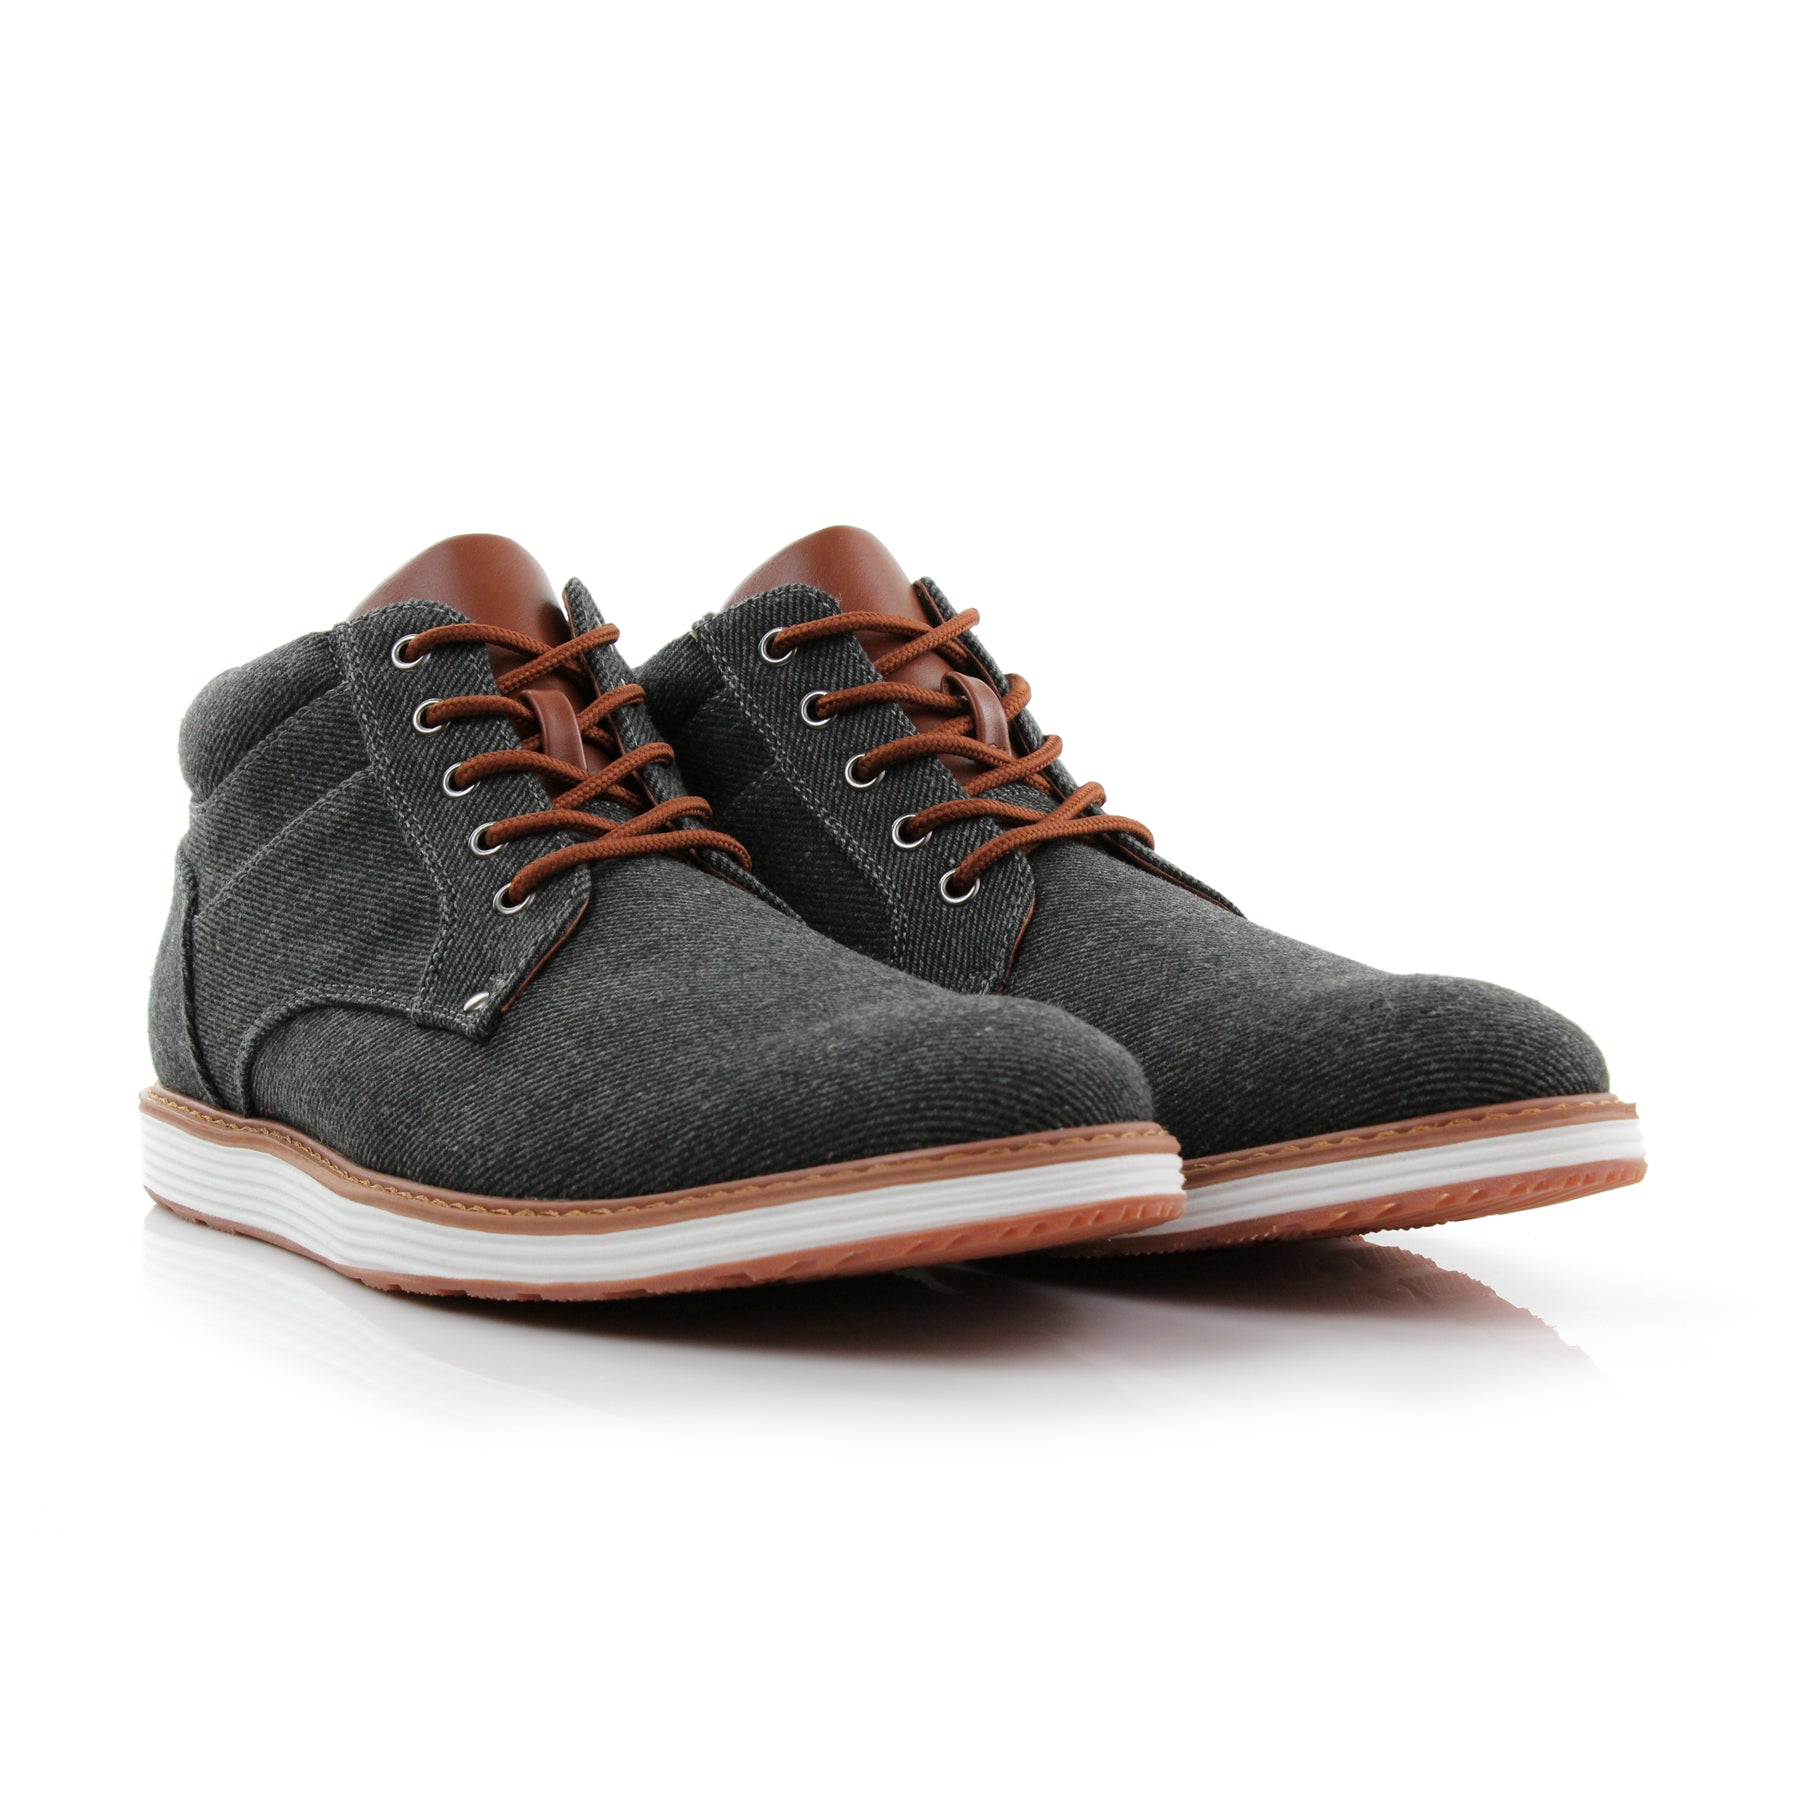 Denim Sneakers | Jax by Ferro Aldo | Conal Footwear | Paired Angle View